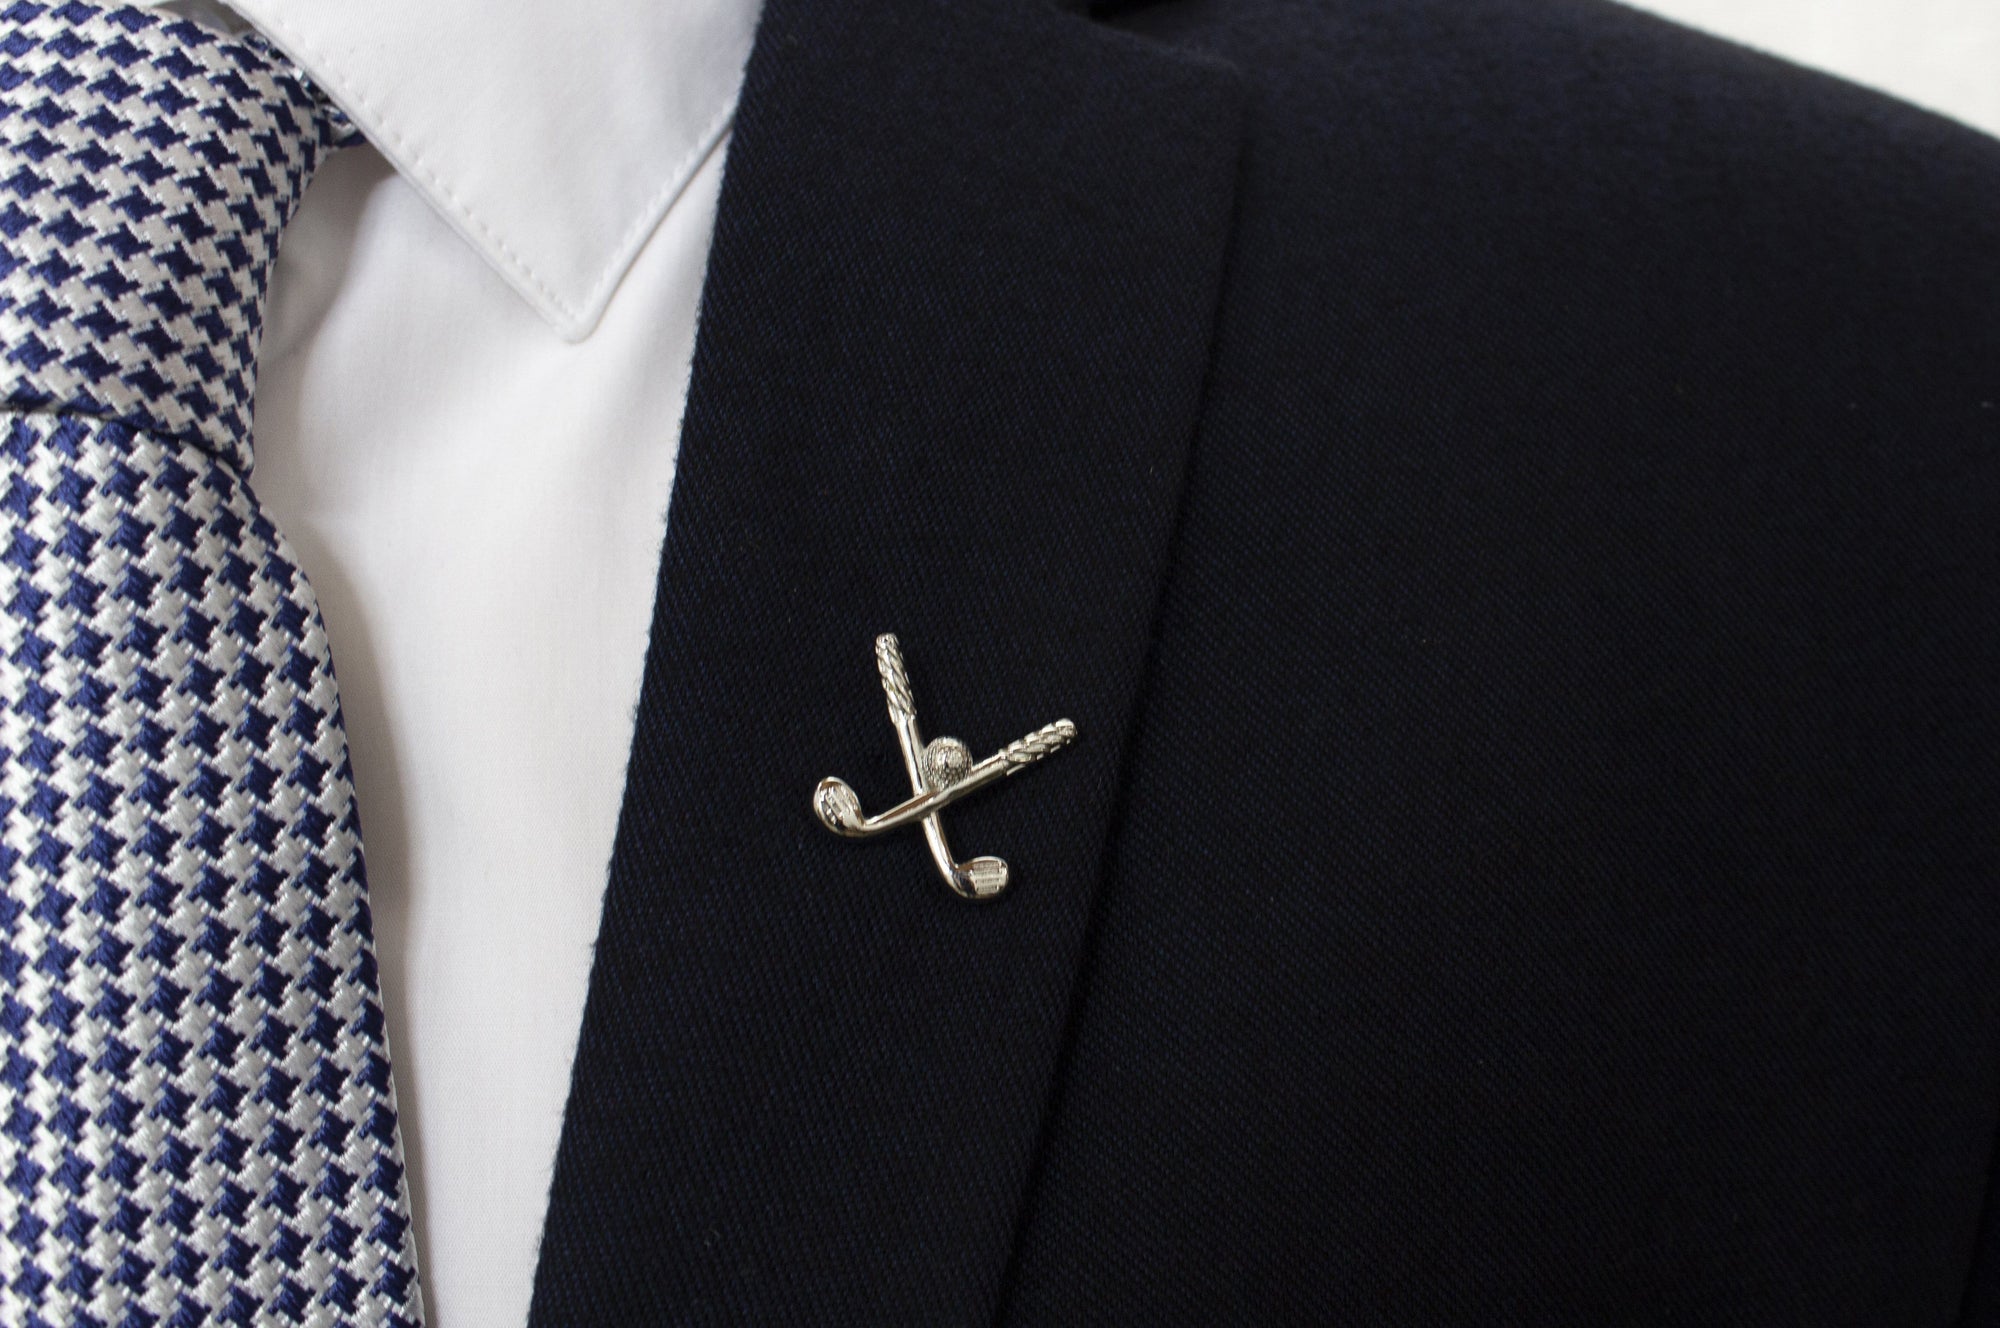 Golf Clubs Lapel Pin on blazer - Stolen Riches